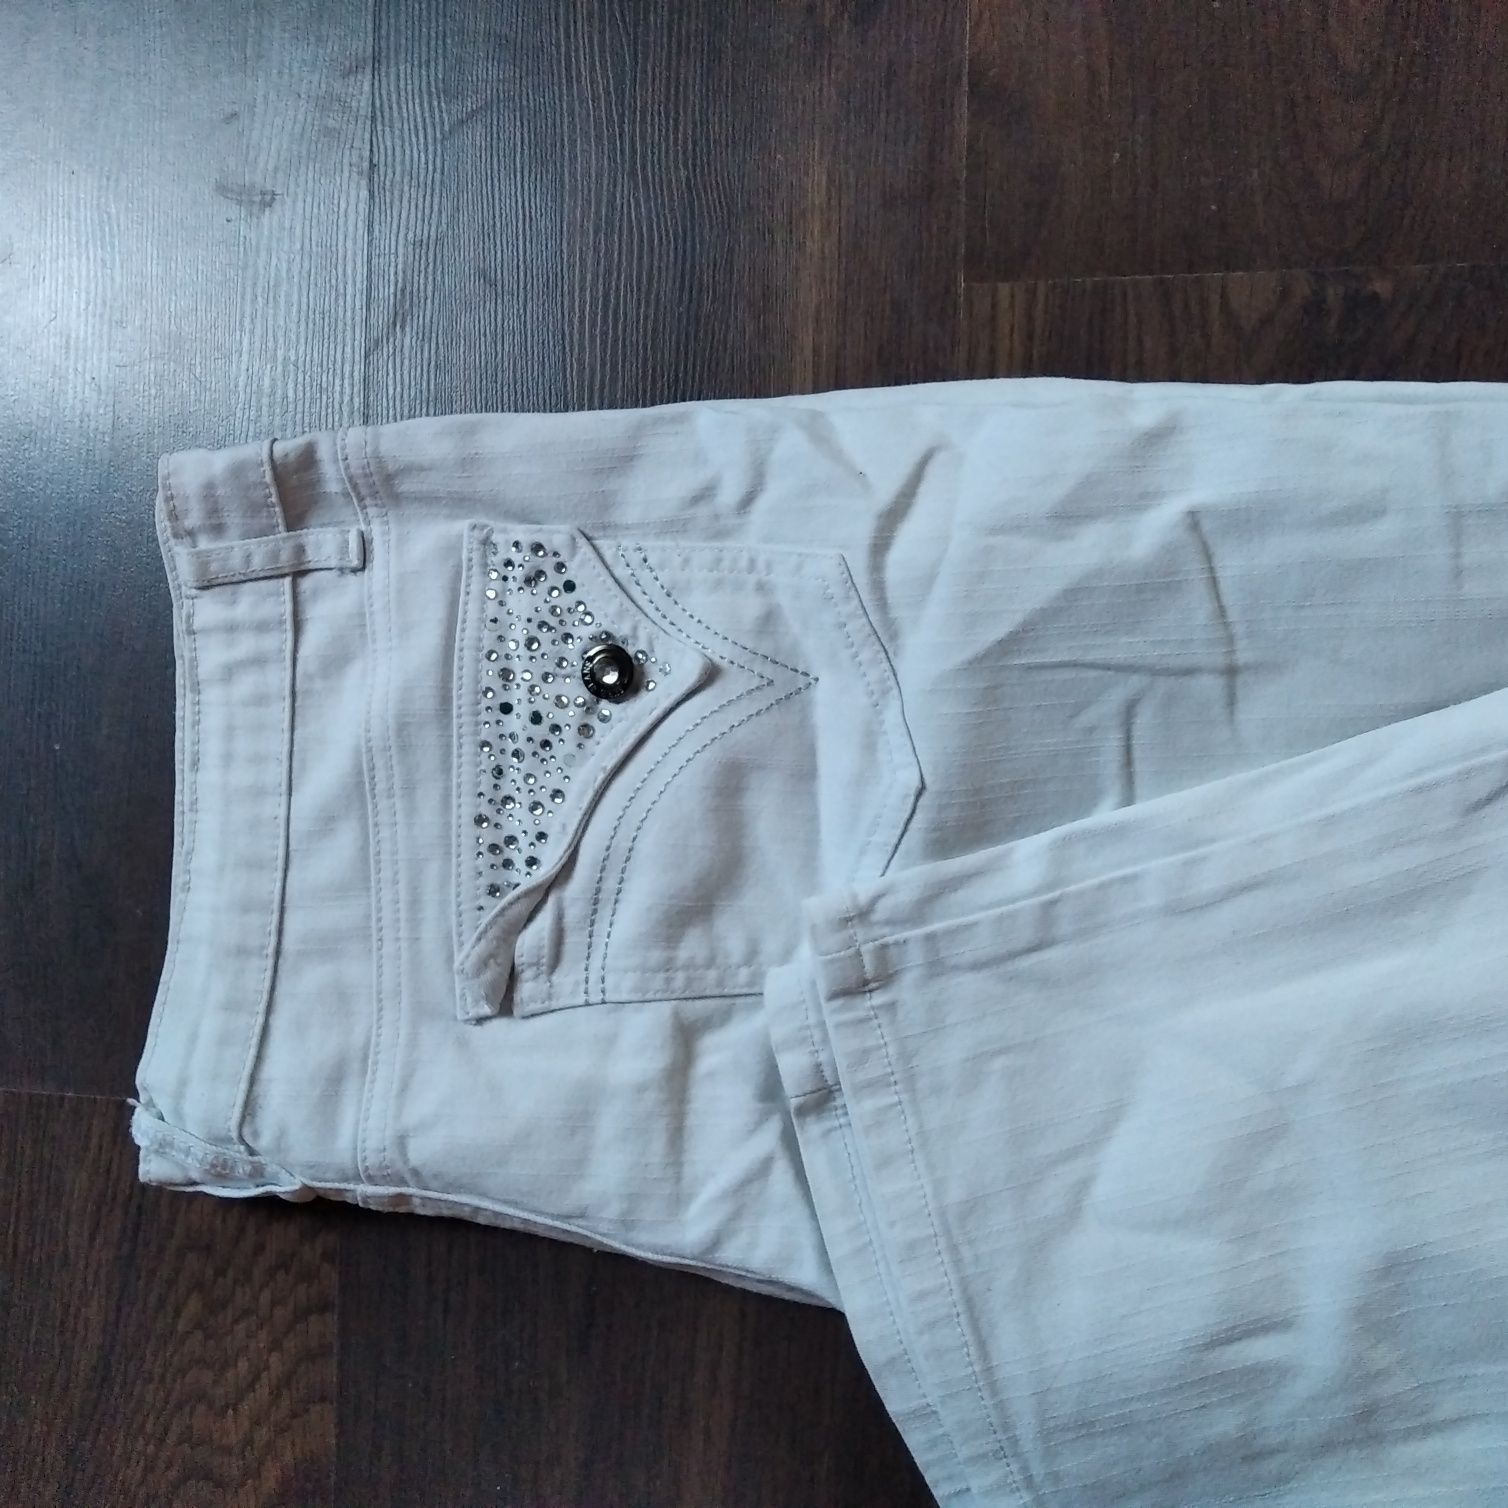 Spodnie damskie białe jeansy r 46/48 pas do 92